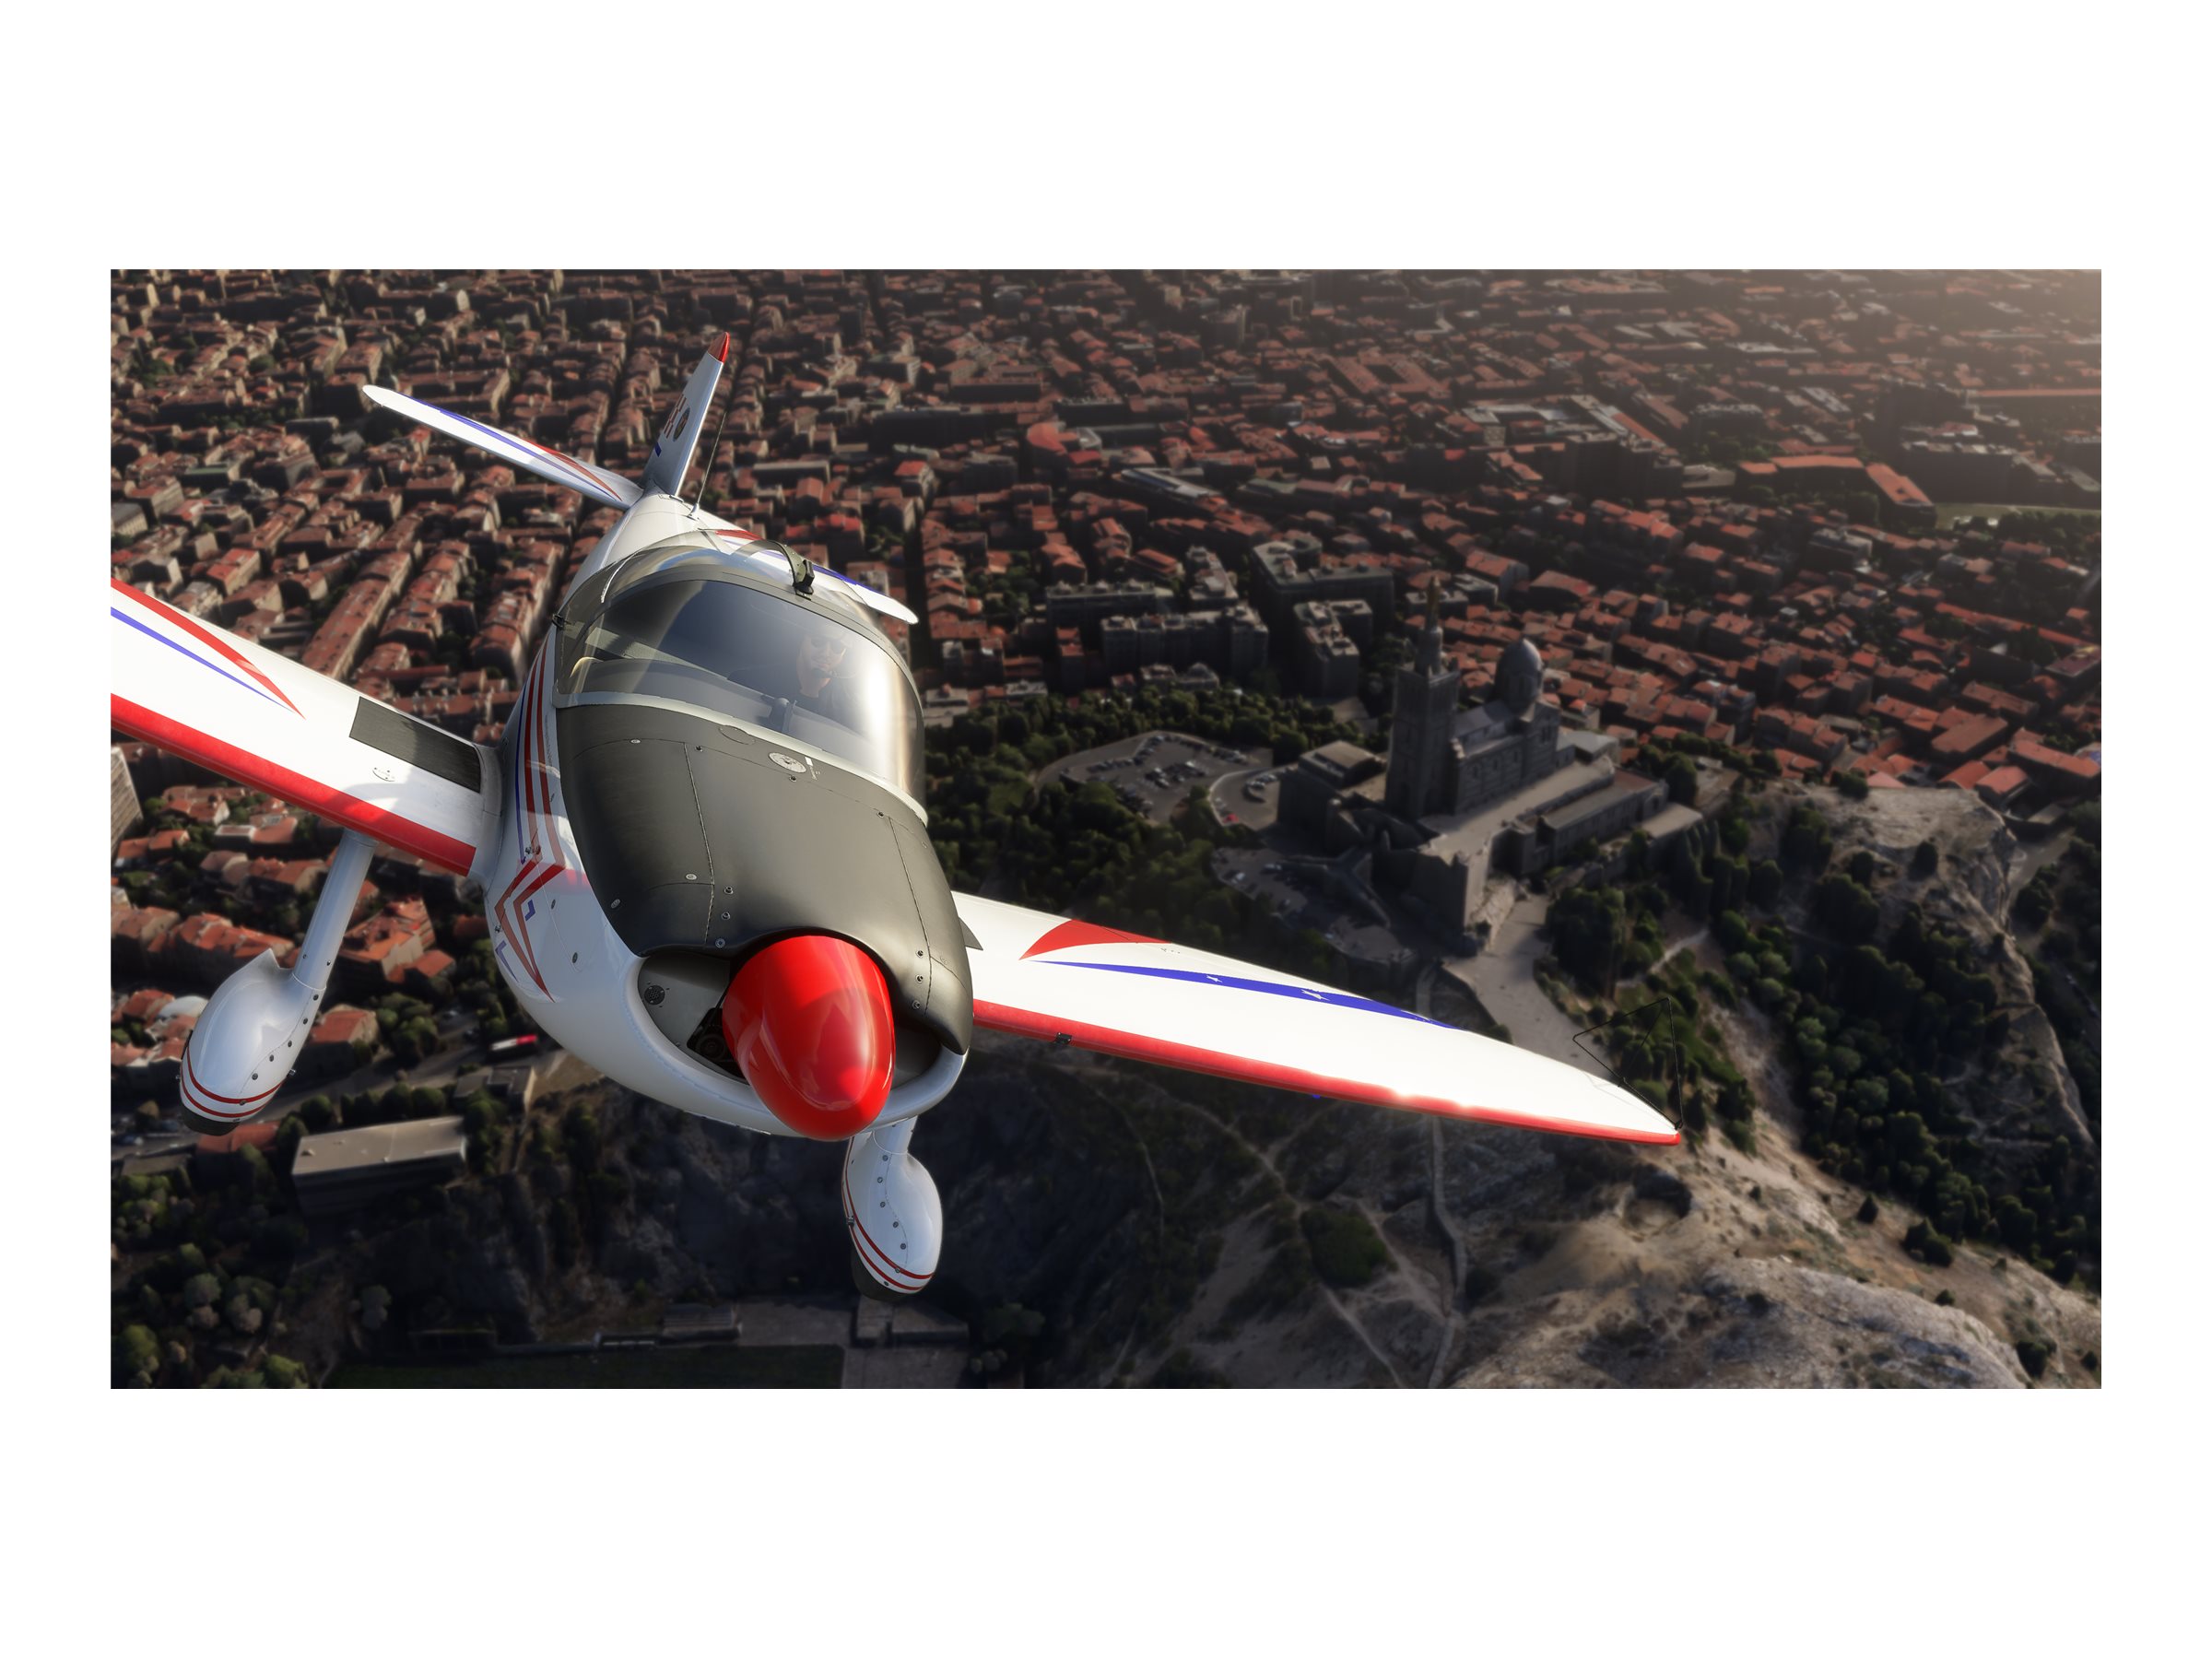 Microsoft Flight Simulator - XBox [Digital] 